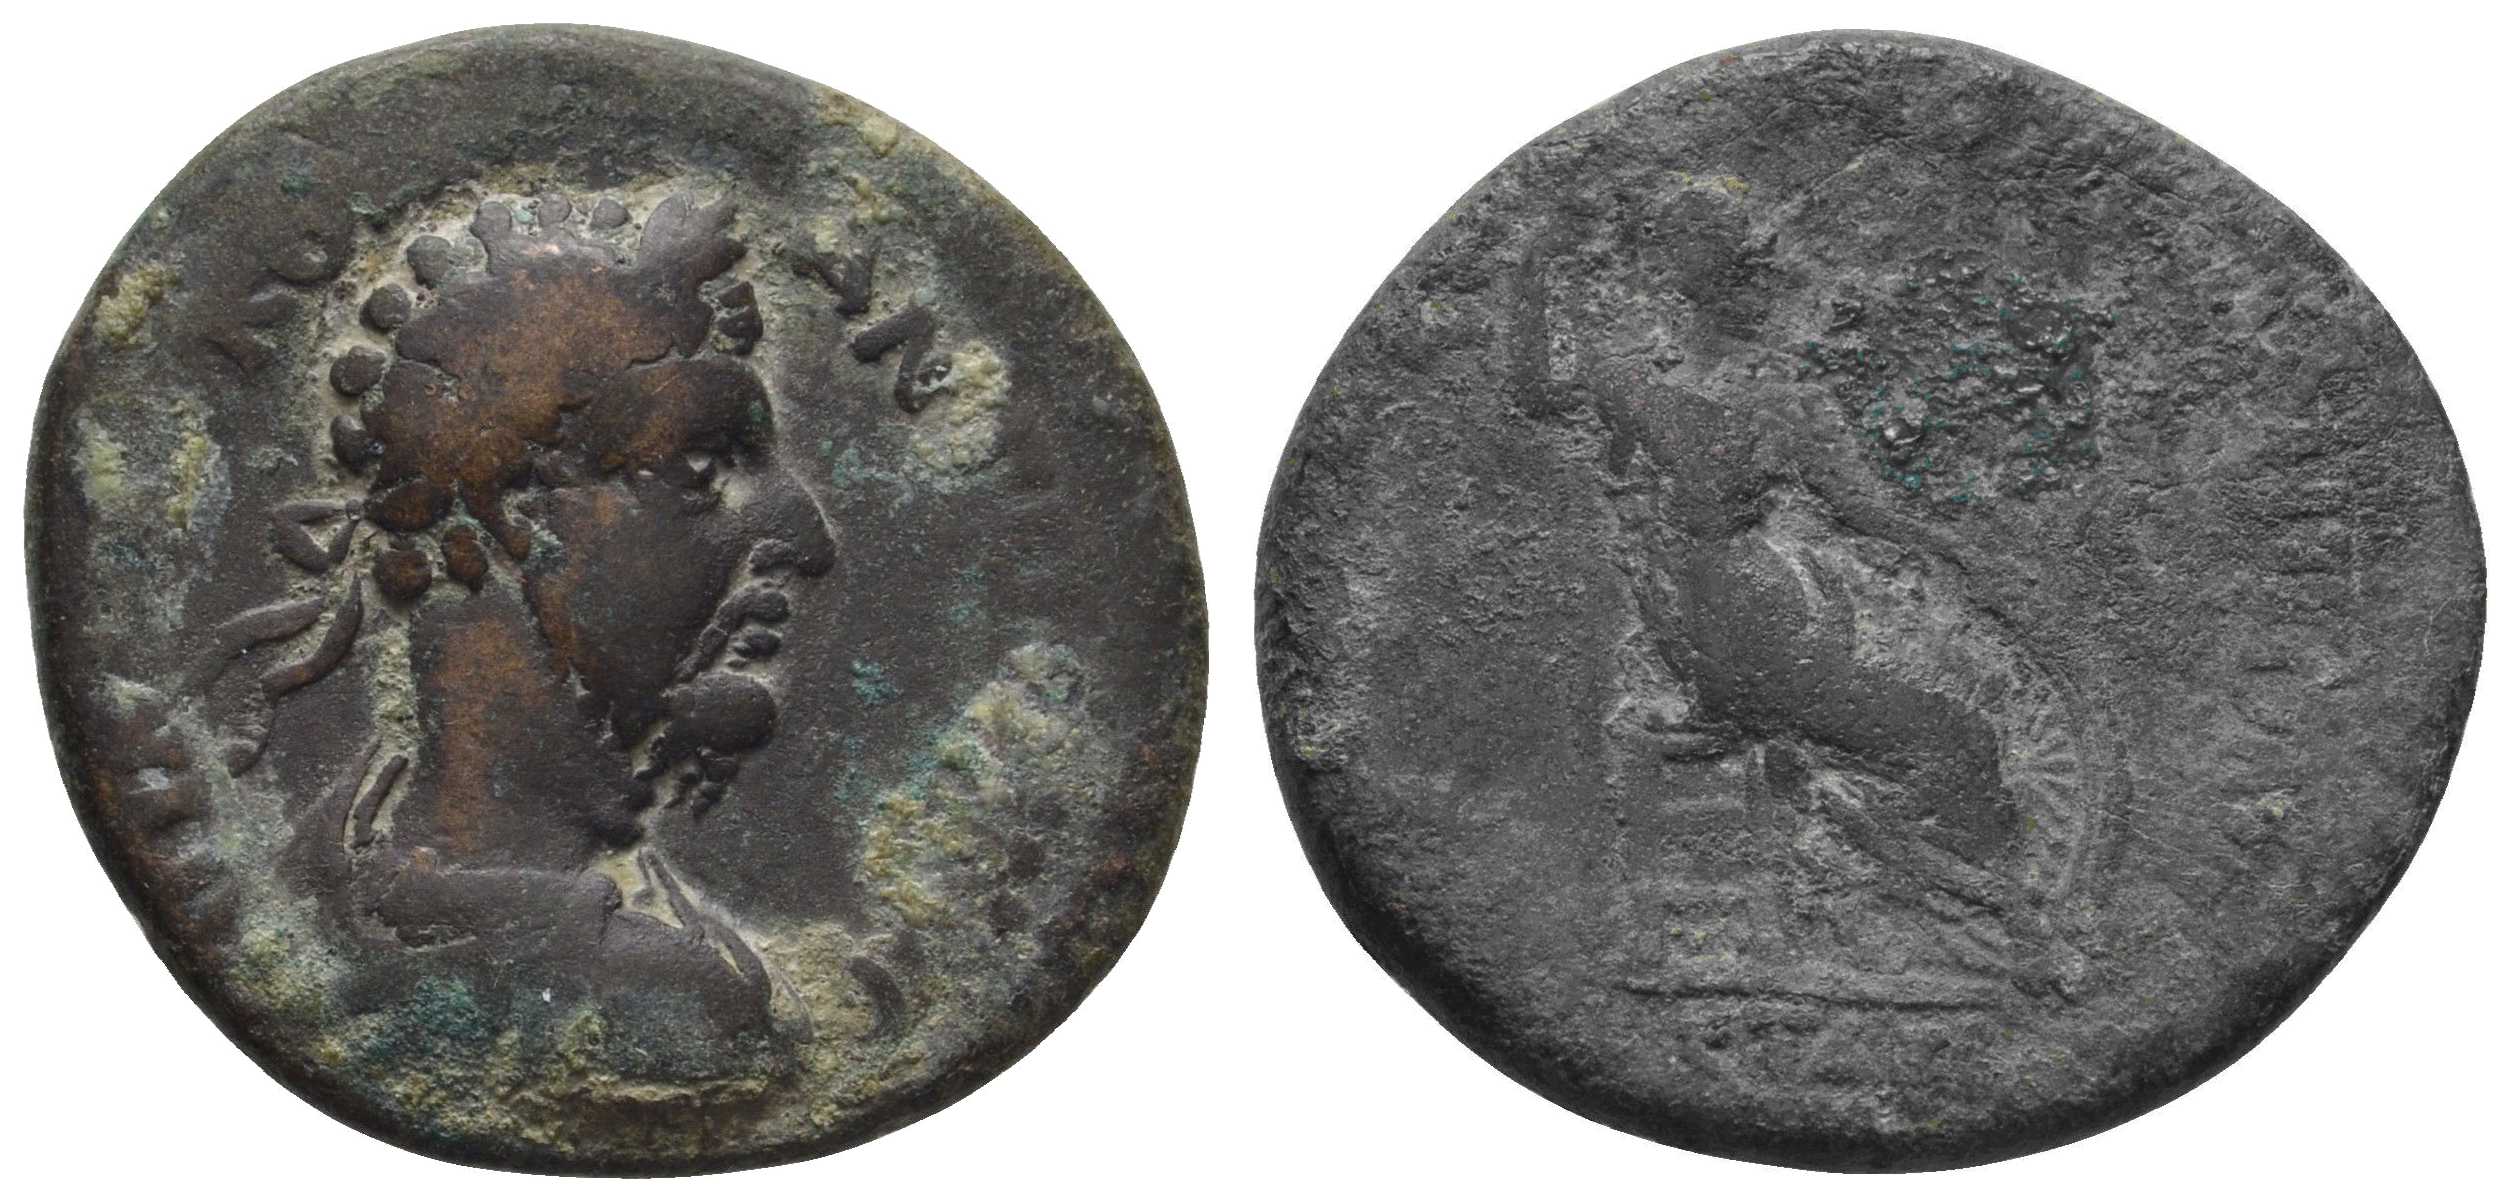 5885 Cabeira-Neocaesarea Pontus Commodus AE